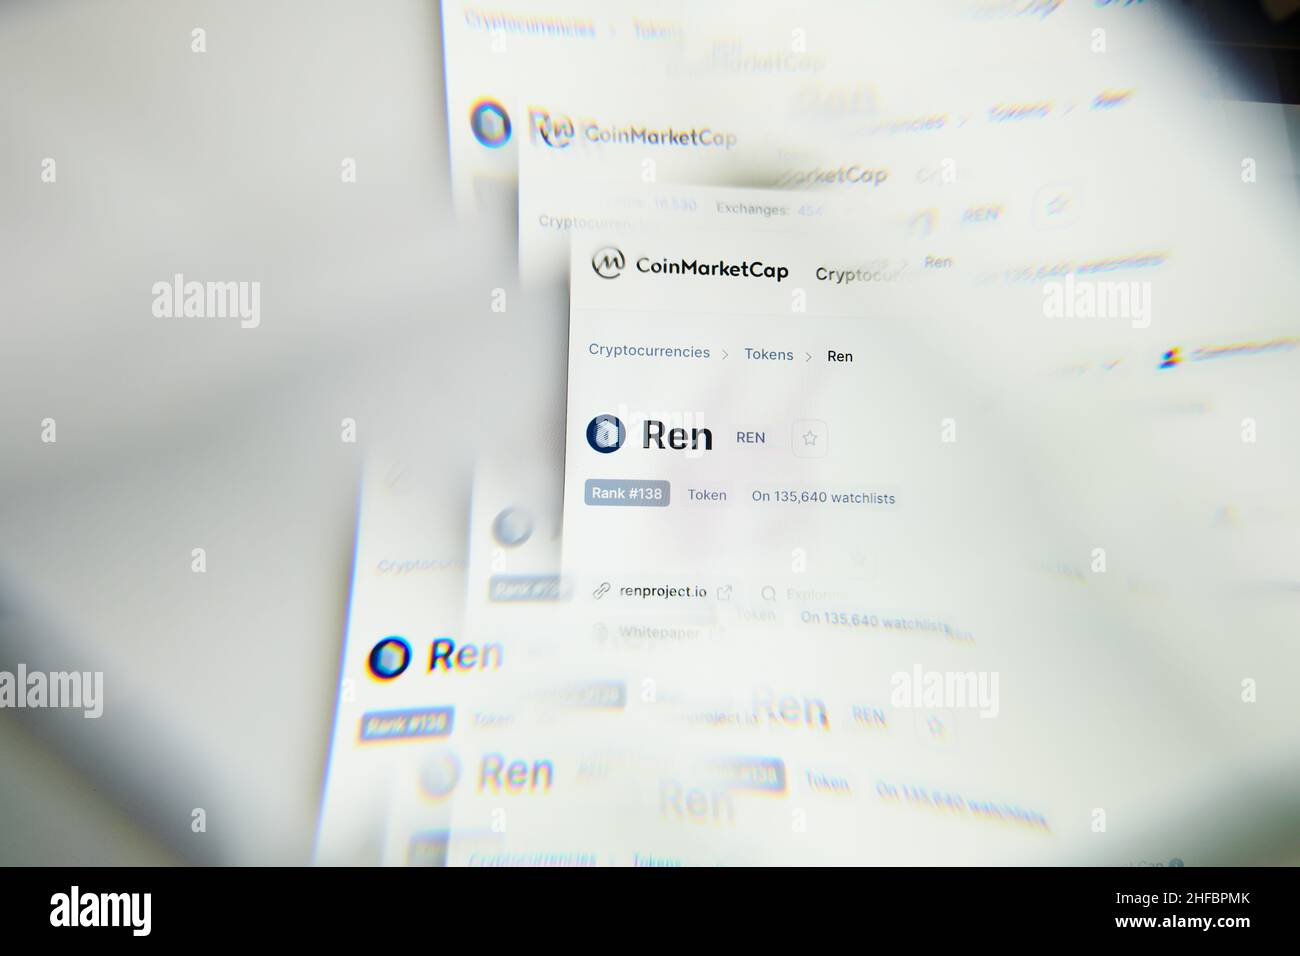 Milan, Italy - January 11, 2022: ren - REN logo on laptop screen seen through an optical prism. Dynamic and unique image form ren, REN coin website. I Stock Photo